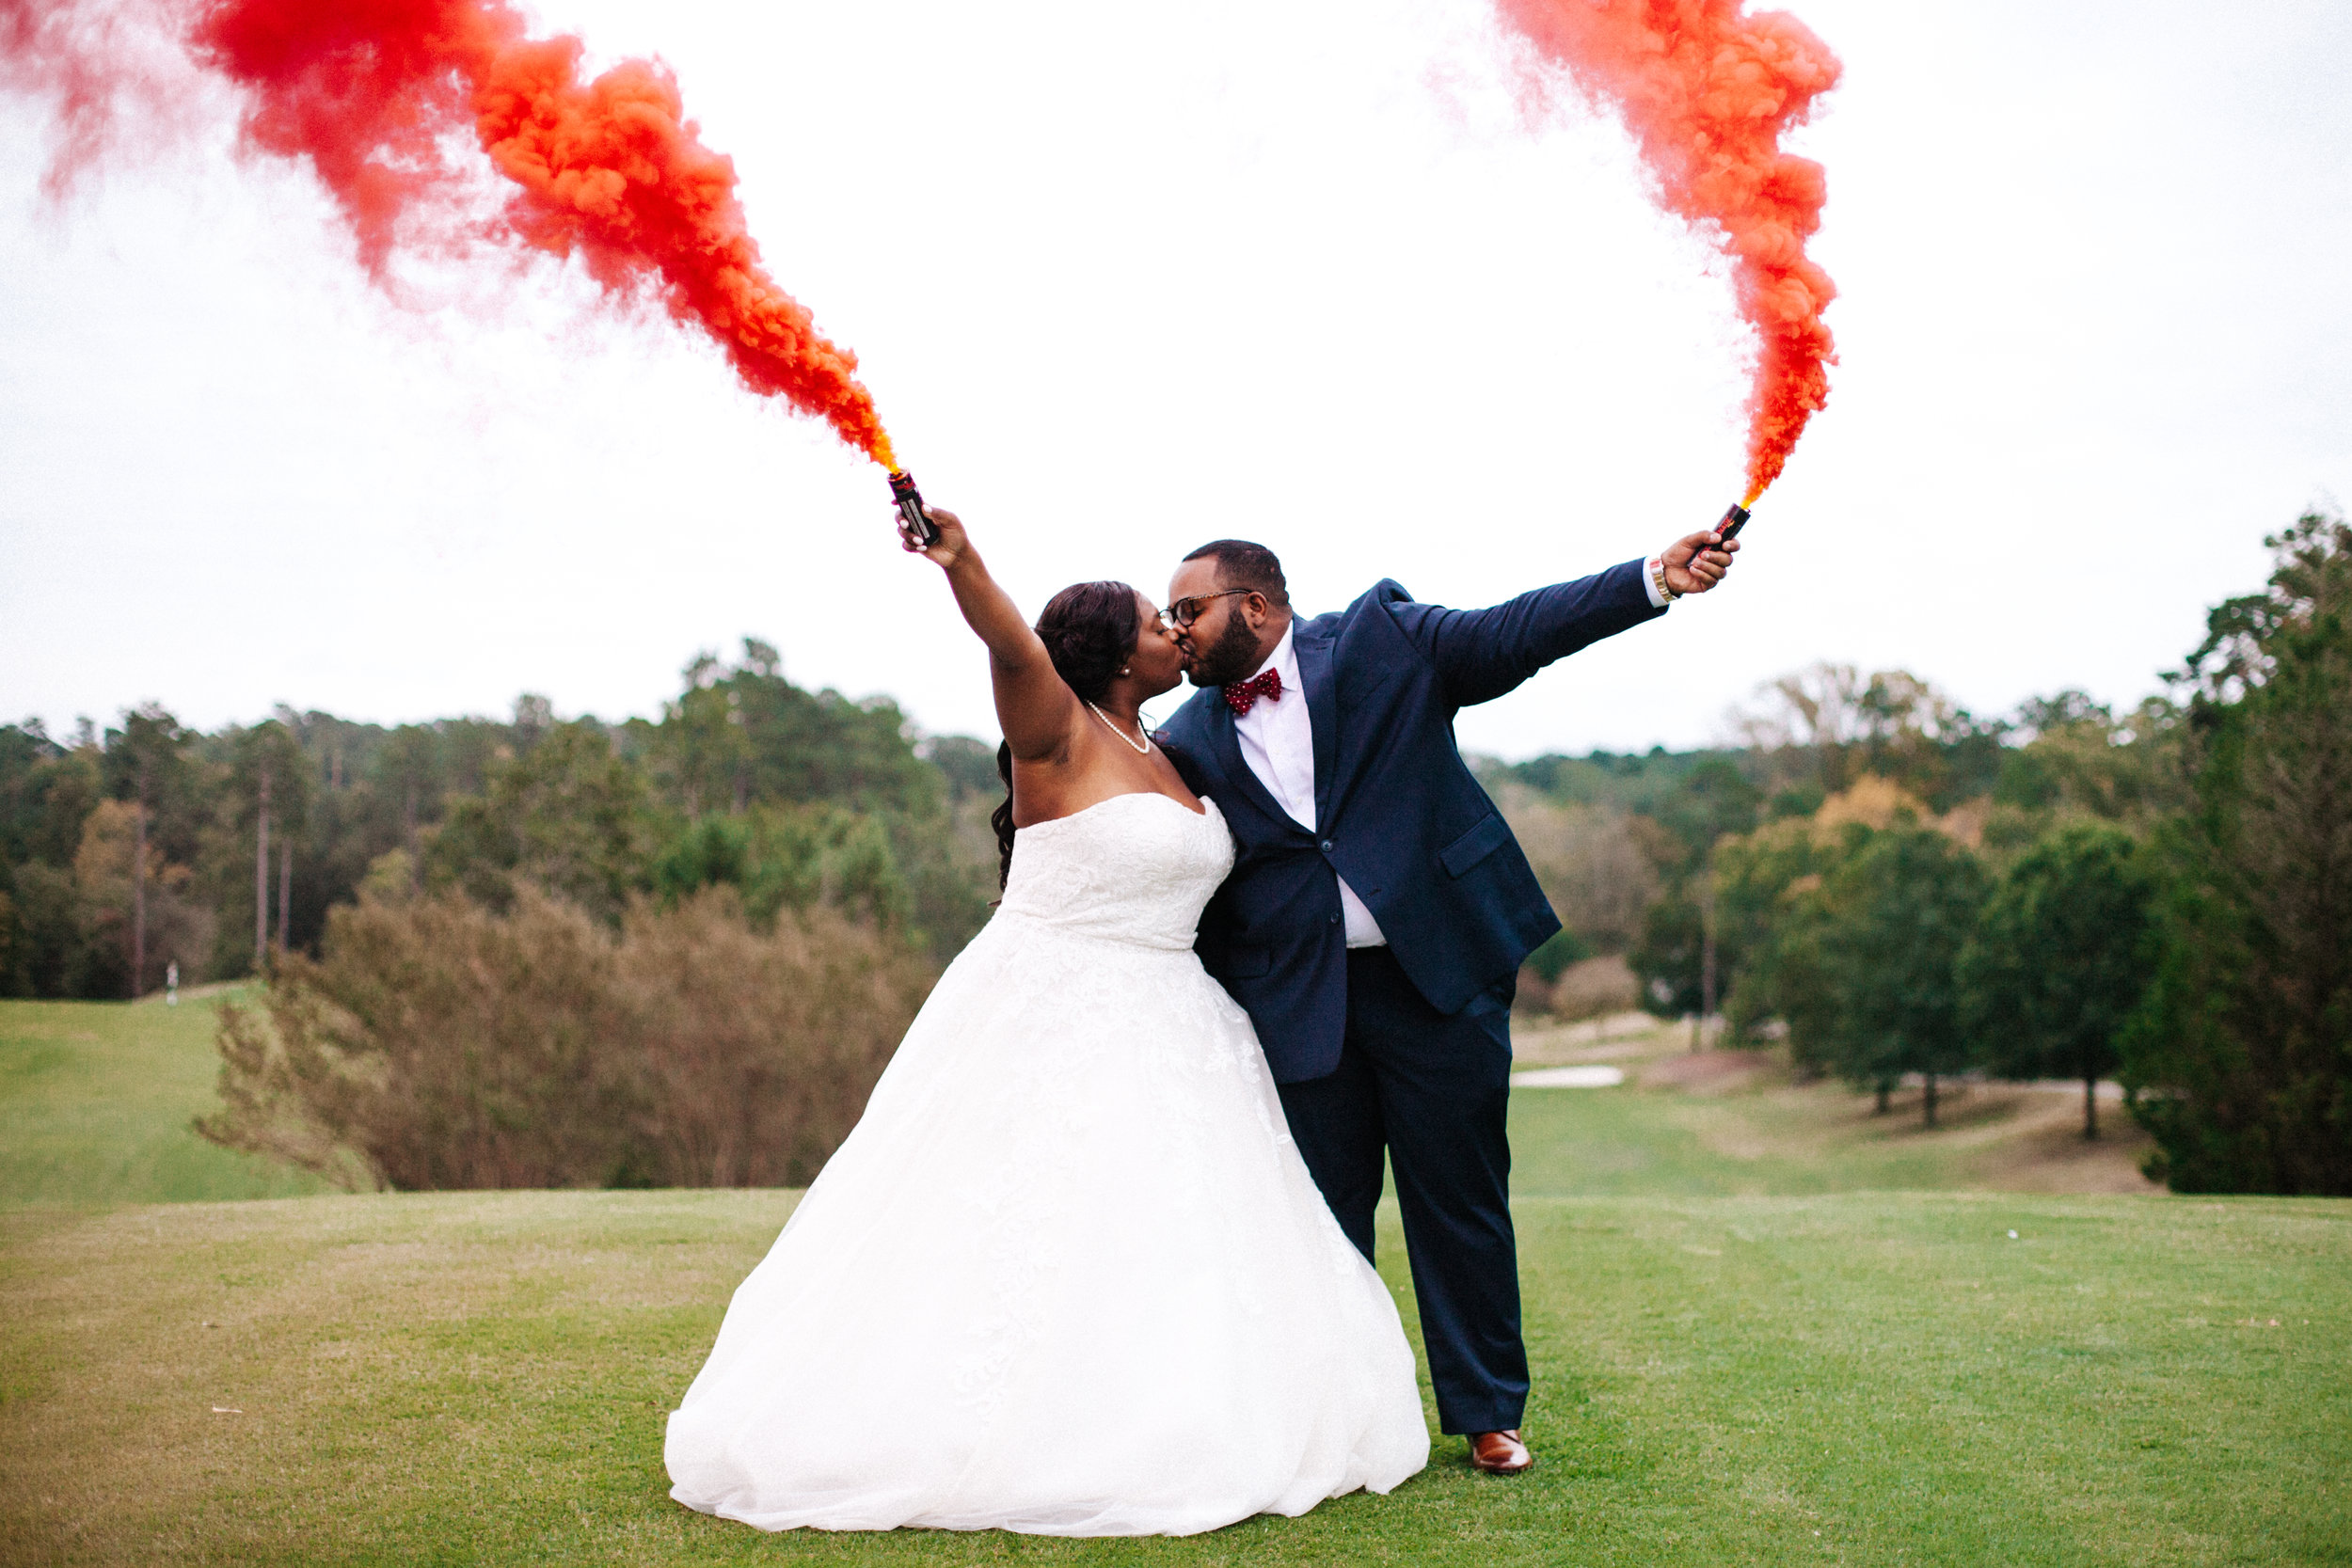  Hope Valley Country Club, Raleigh NC | Fall wedding | Red smoke bomb wedding photos | Marina Rey Photography 